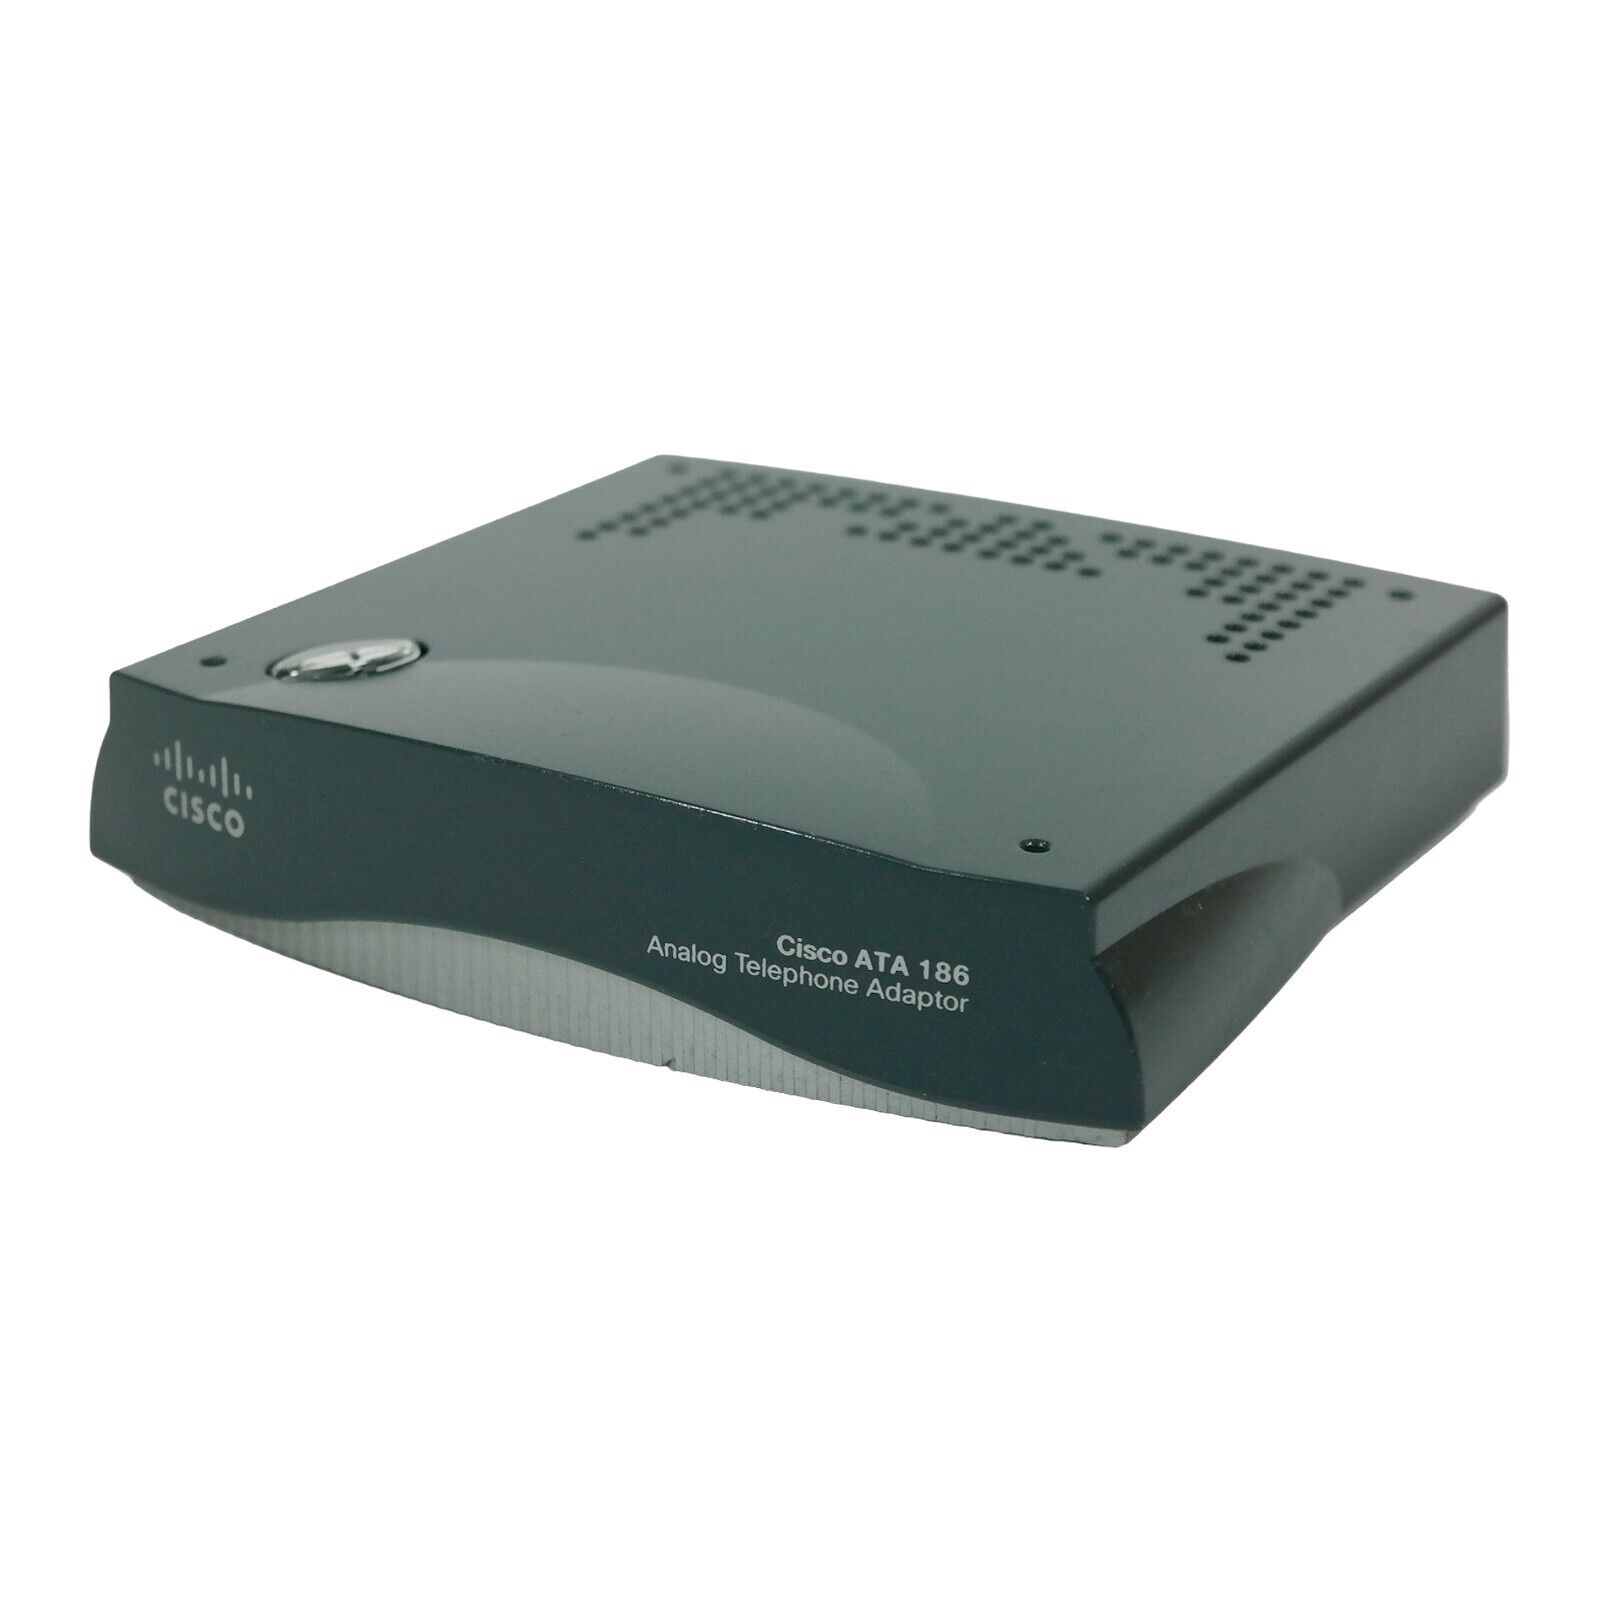 Cisco ATA 186 Analog Telephone Adapter Fully Tested / Warranty